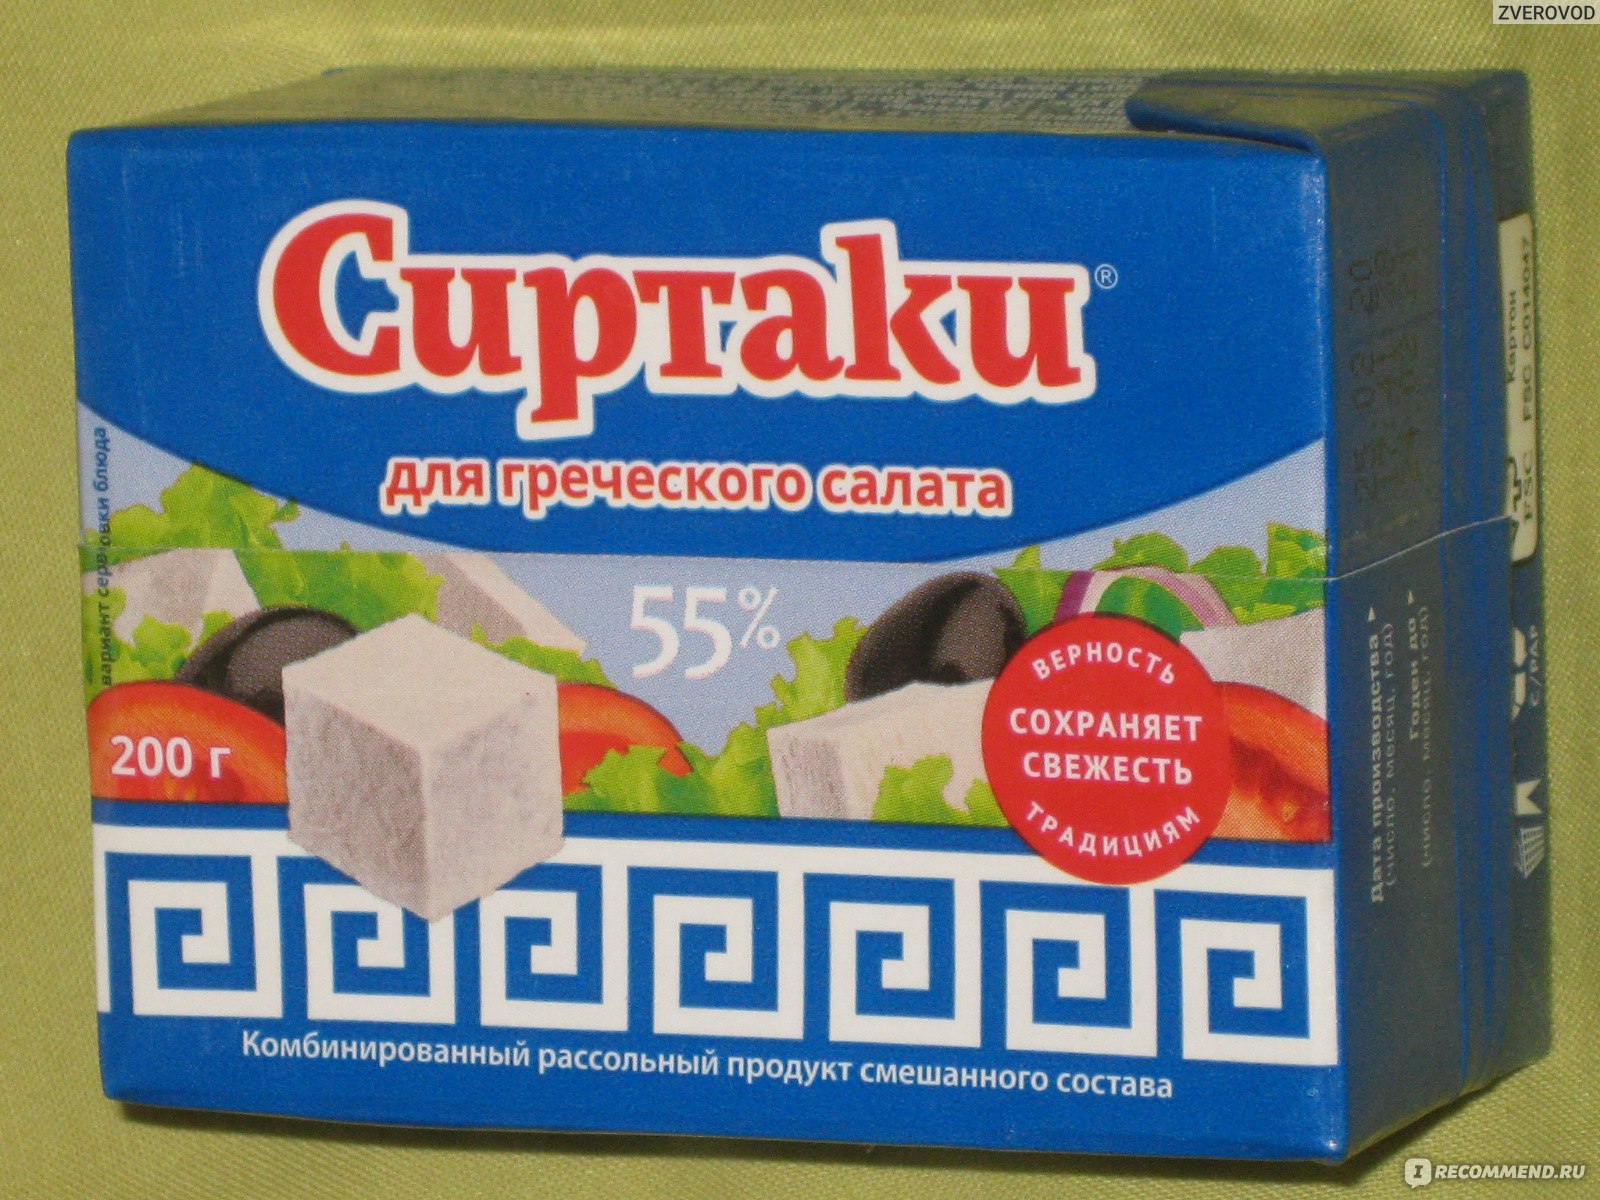 Сыр Сиртаки Фото Упаковки